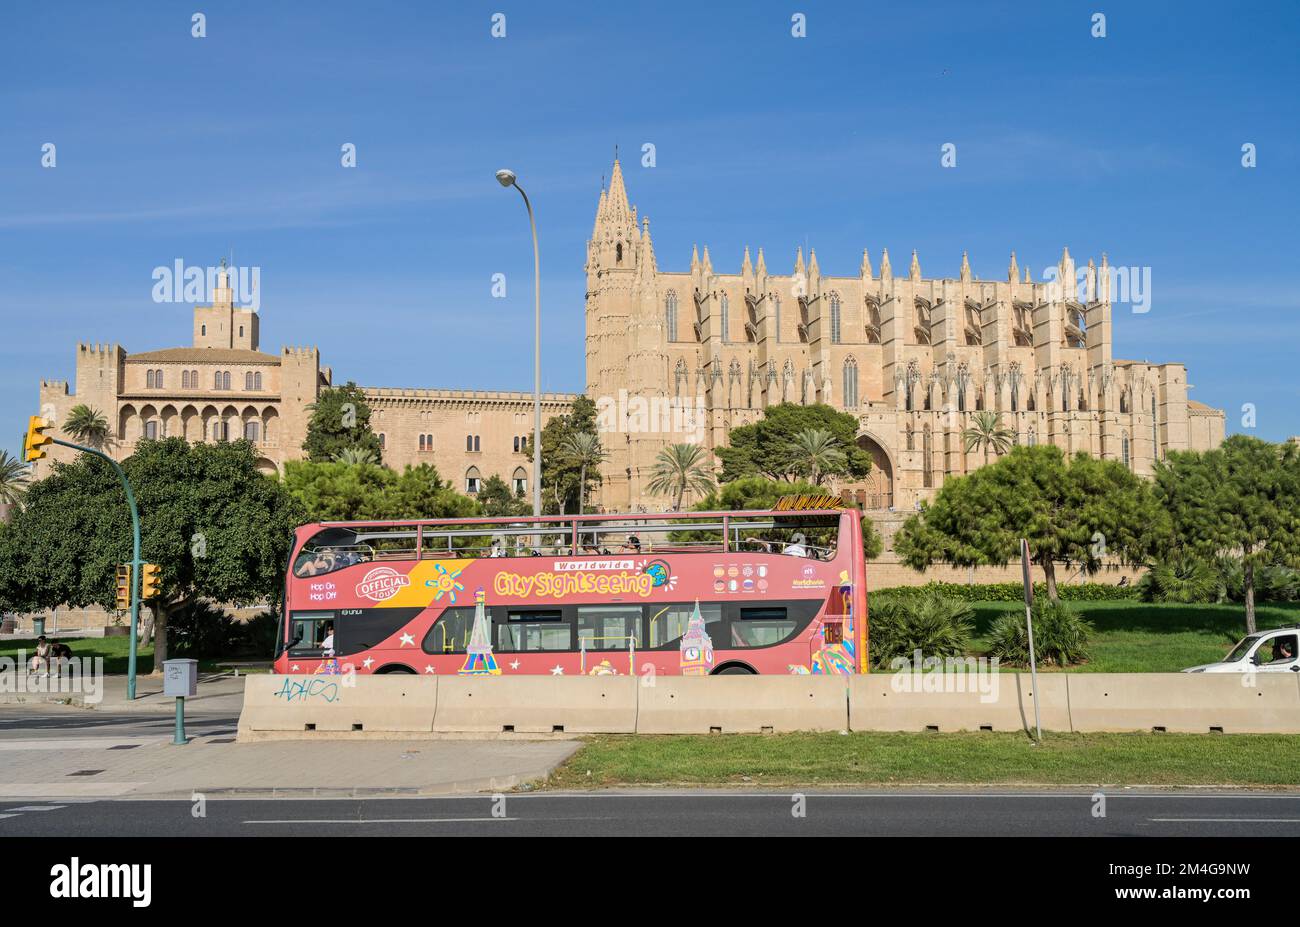 Bus, Stadtbesichtigung, Touristen, Südansicht der Kathedrale, Catedral de  Palma de Mallorca, Palma, Mallorca, Spanien Stock Photo - Alamy